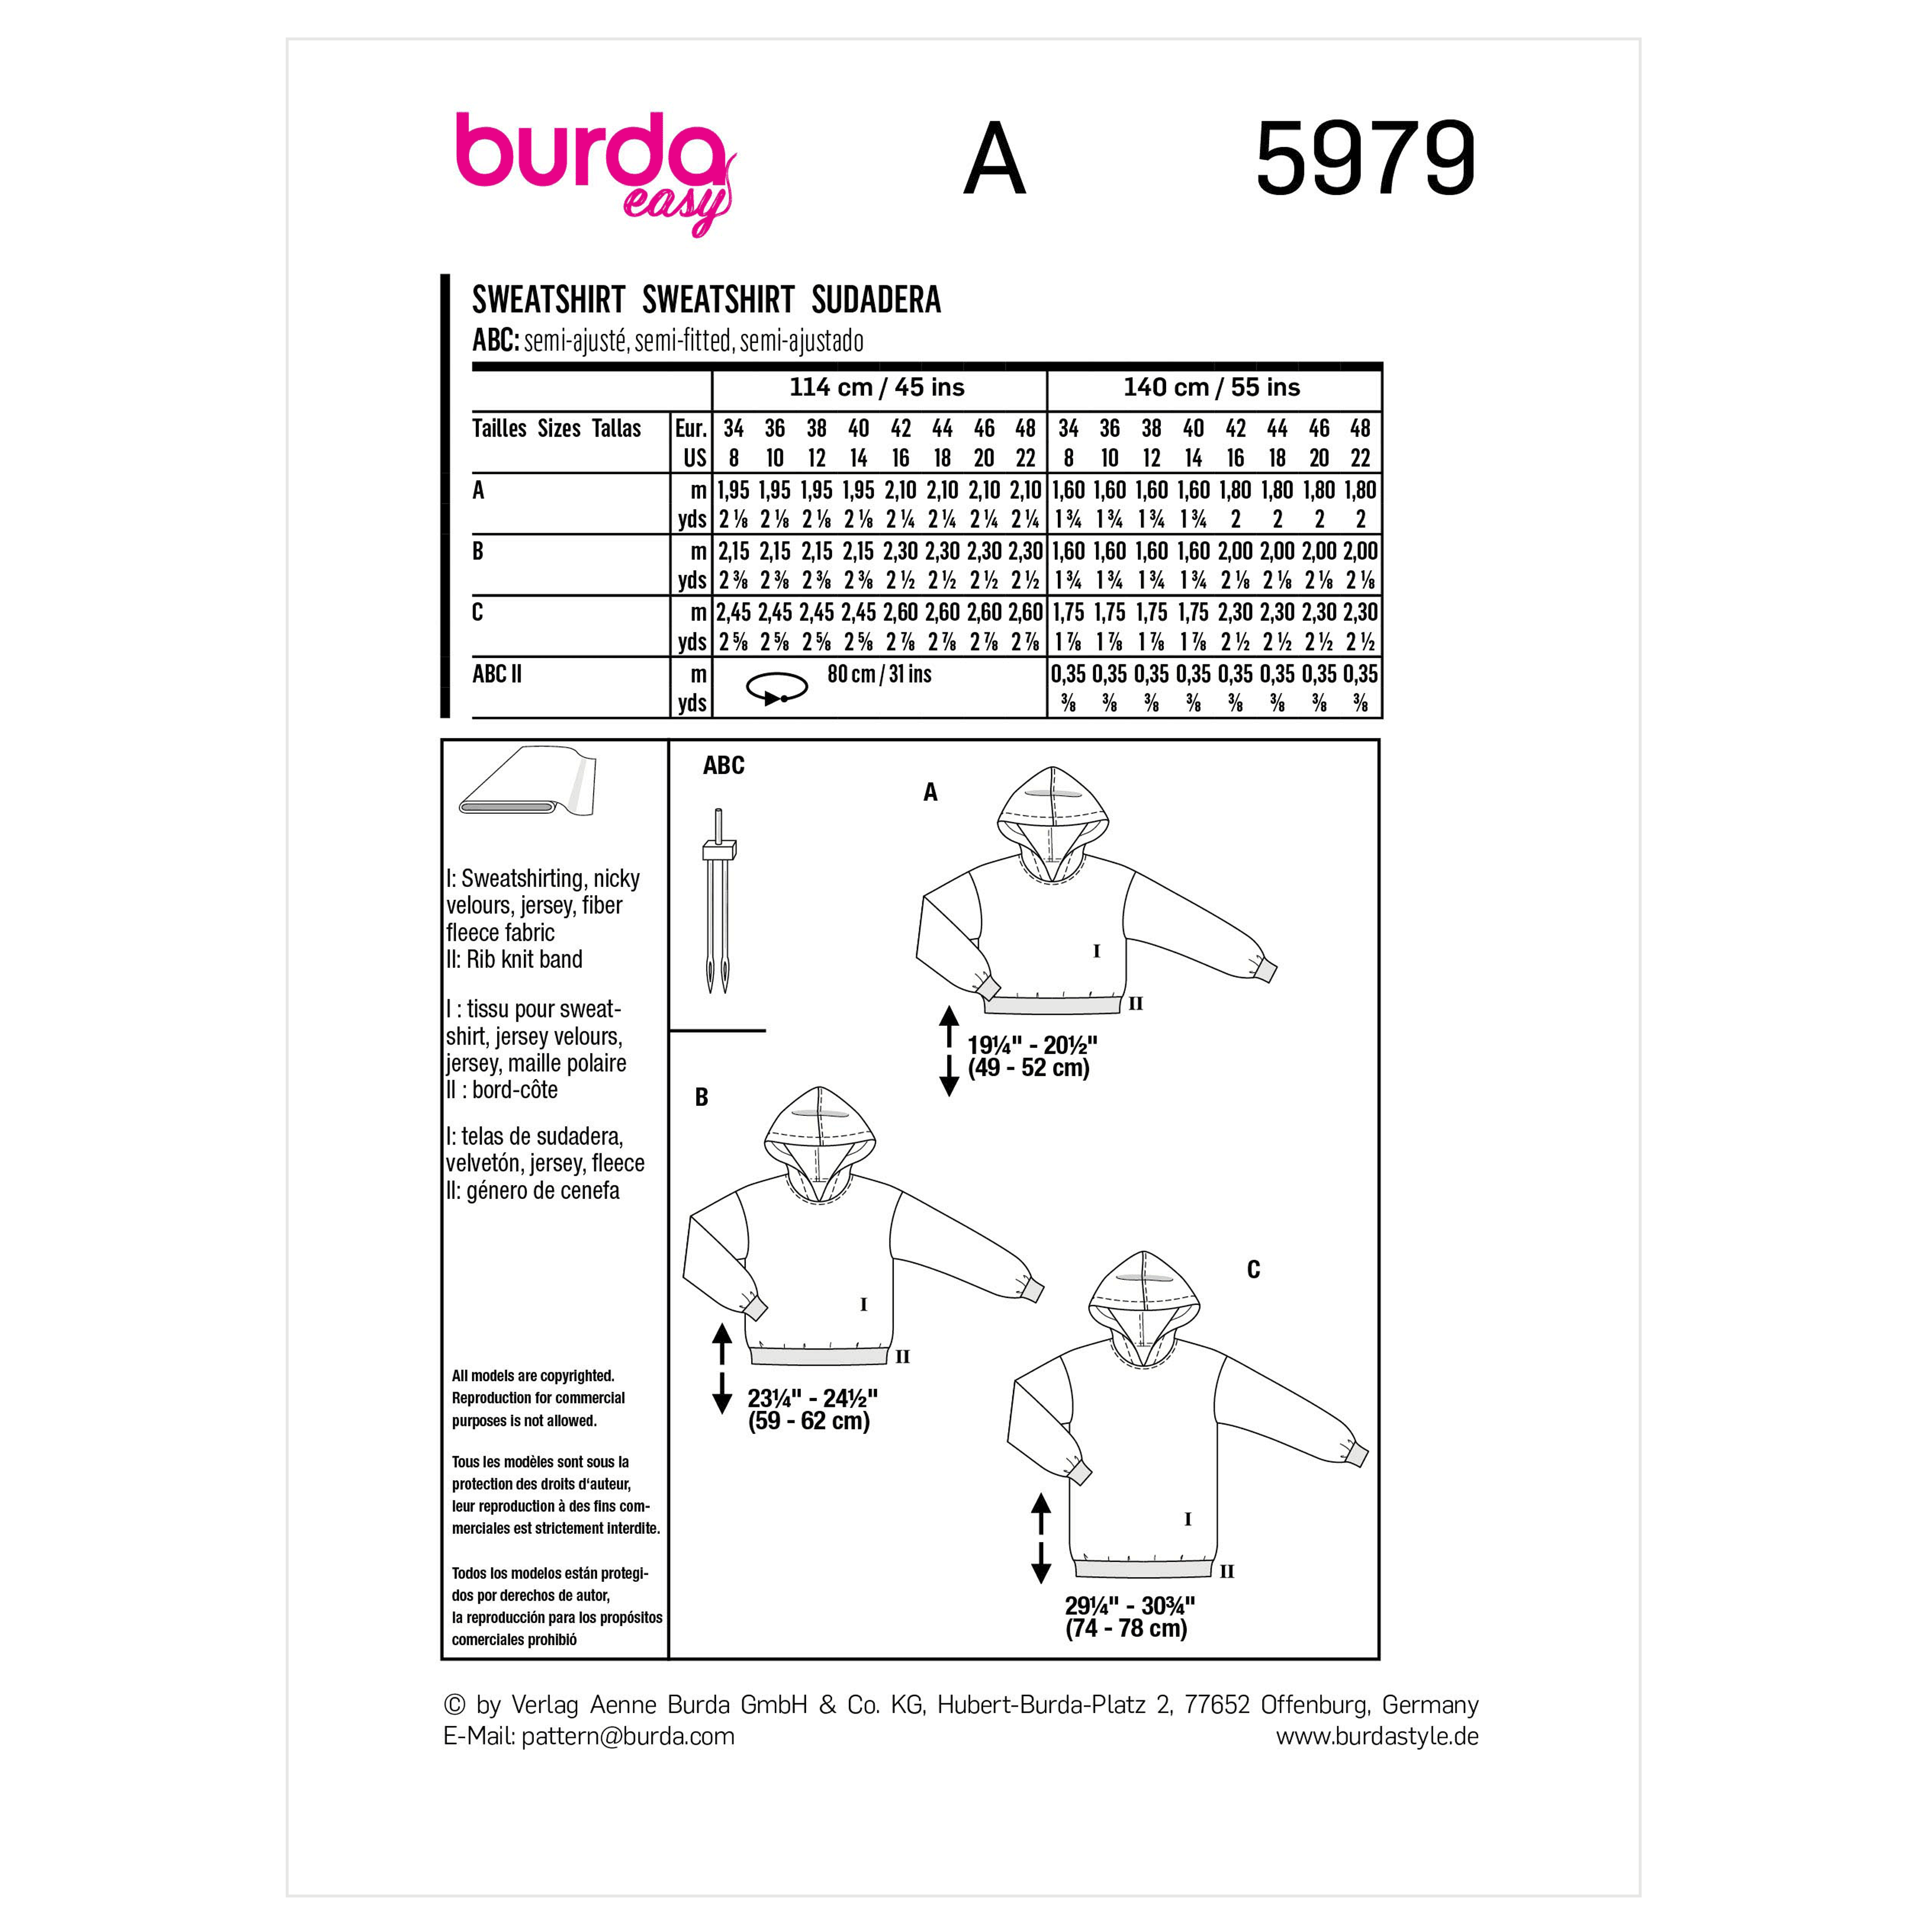 Burda Sewing Pattern 5979 Misses' Hoodie in Three Lengths from Jaycotts Sewing Supplies